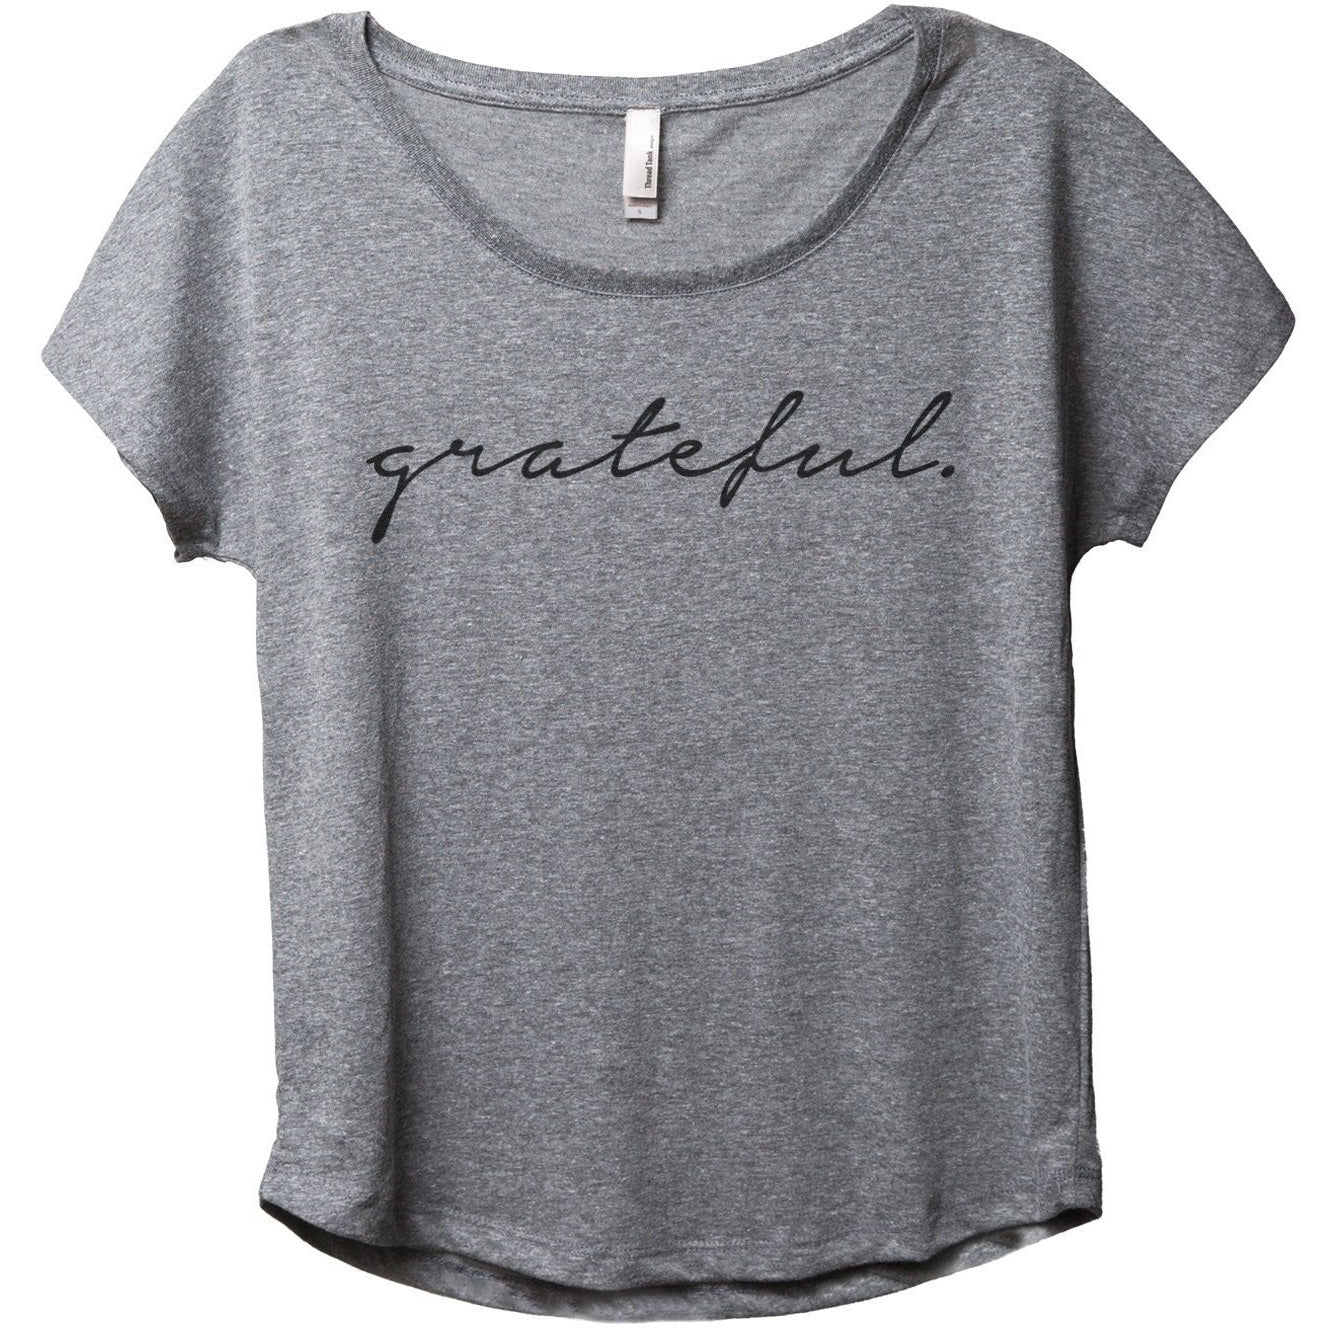 Grateful Women's Relaxed Slouchy Dolman T-Shirt Tee Heather Grey